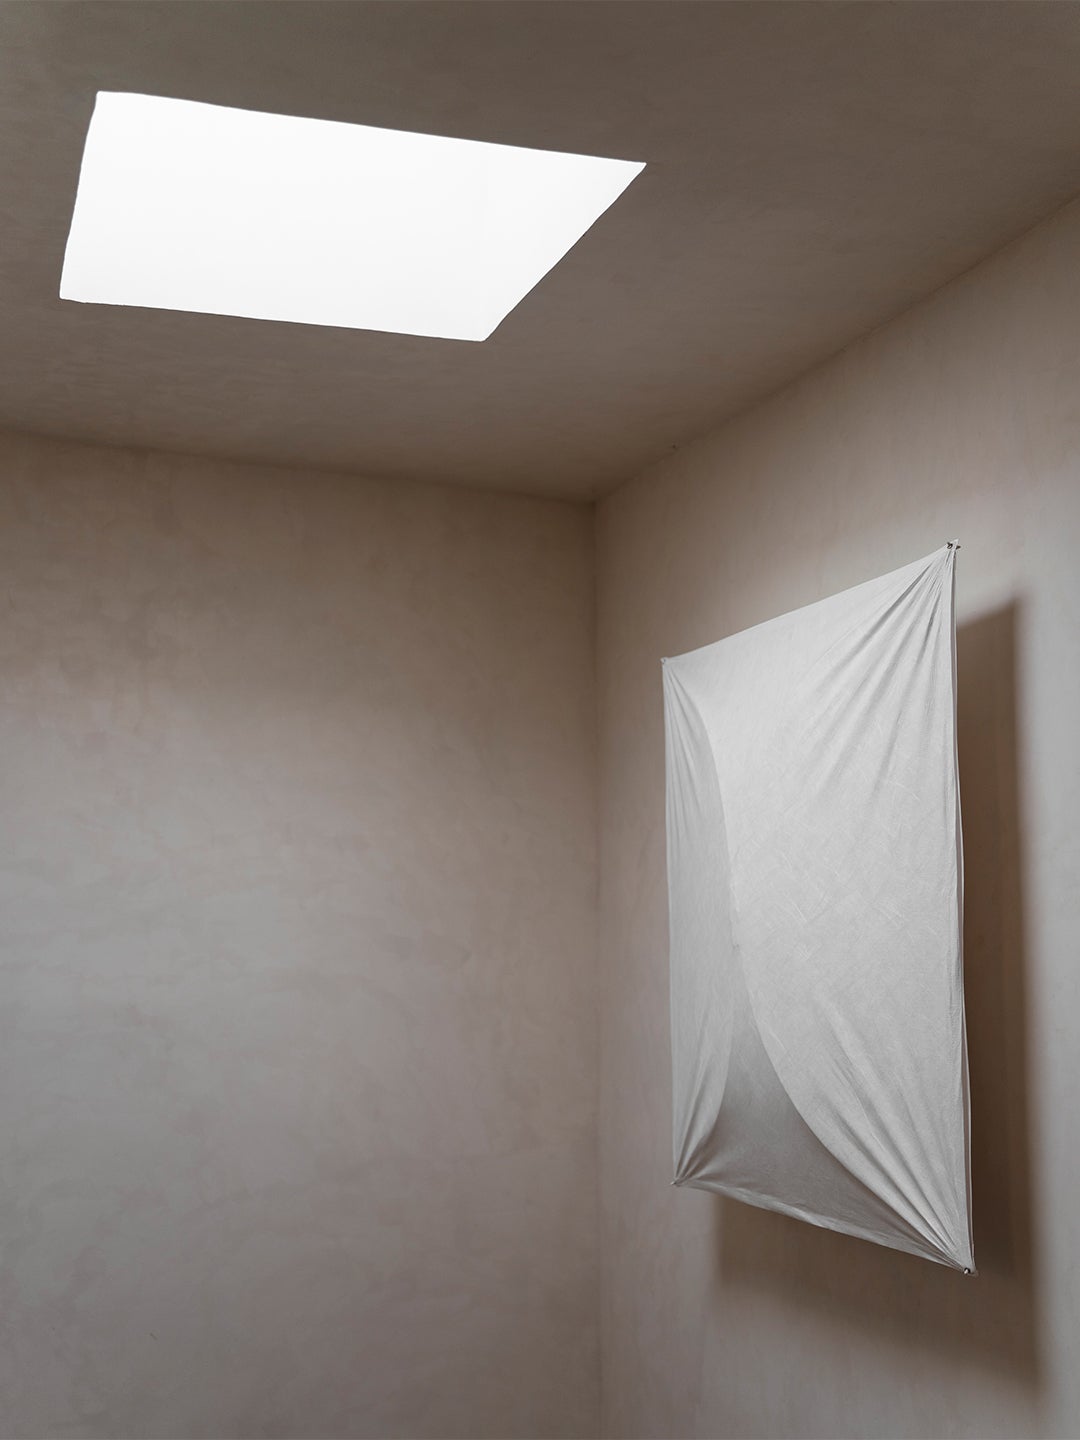 wall light near skylight